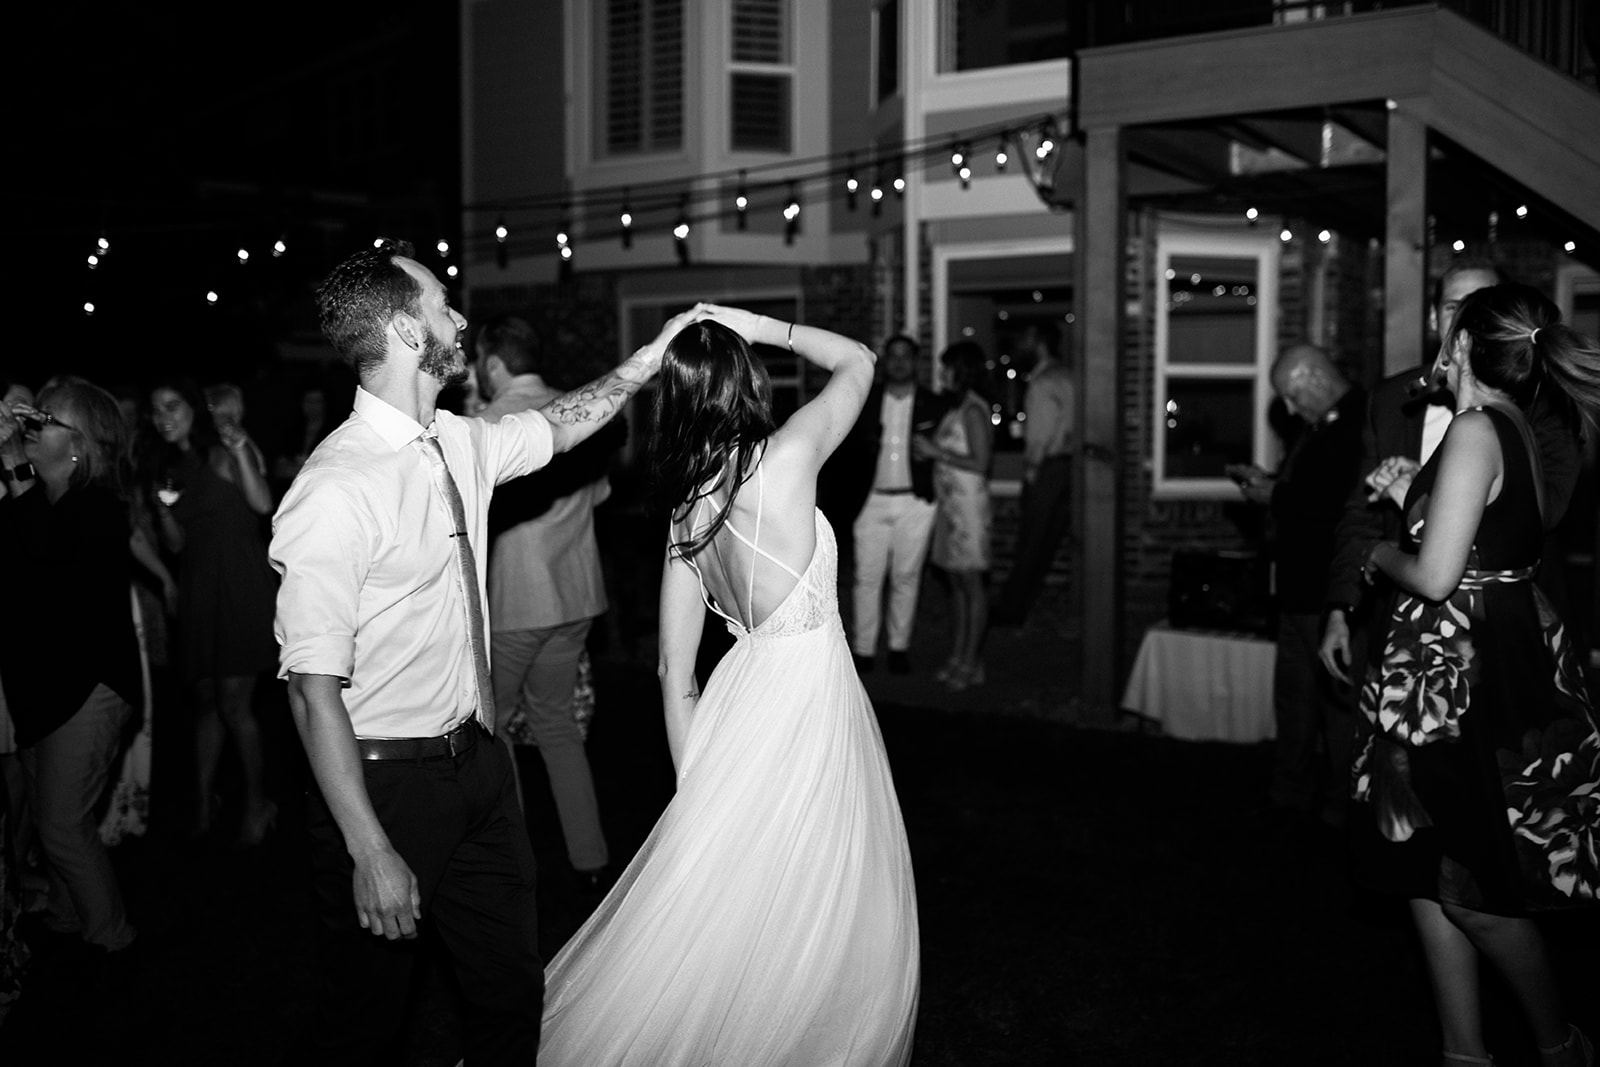 groom spins bride on dance floor at wedding reception